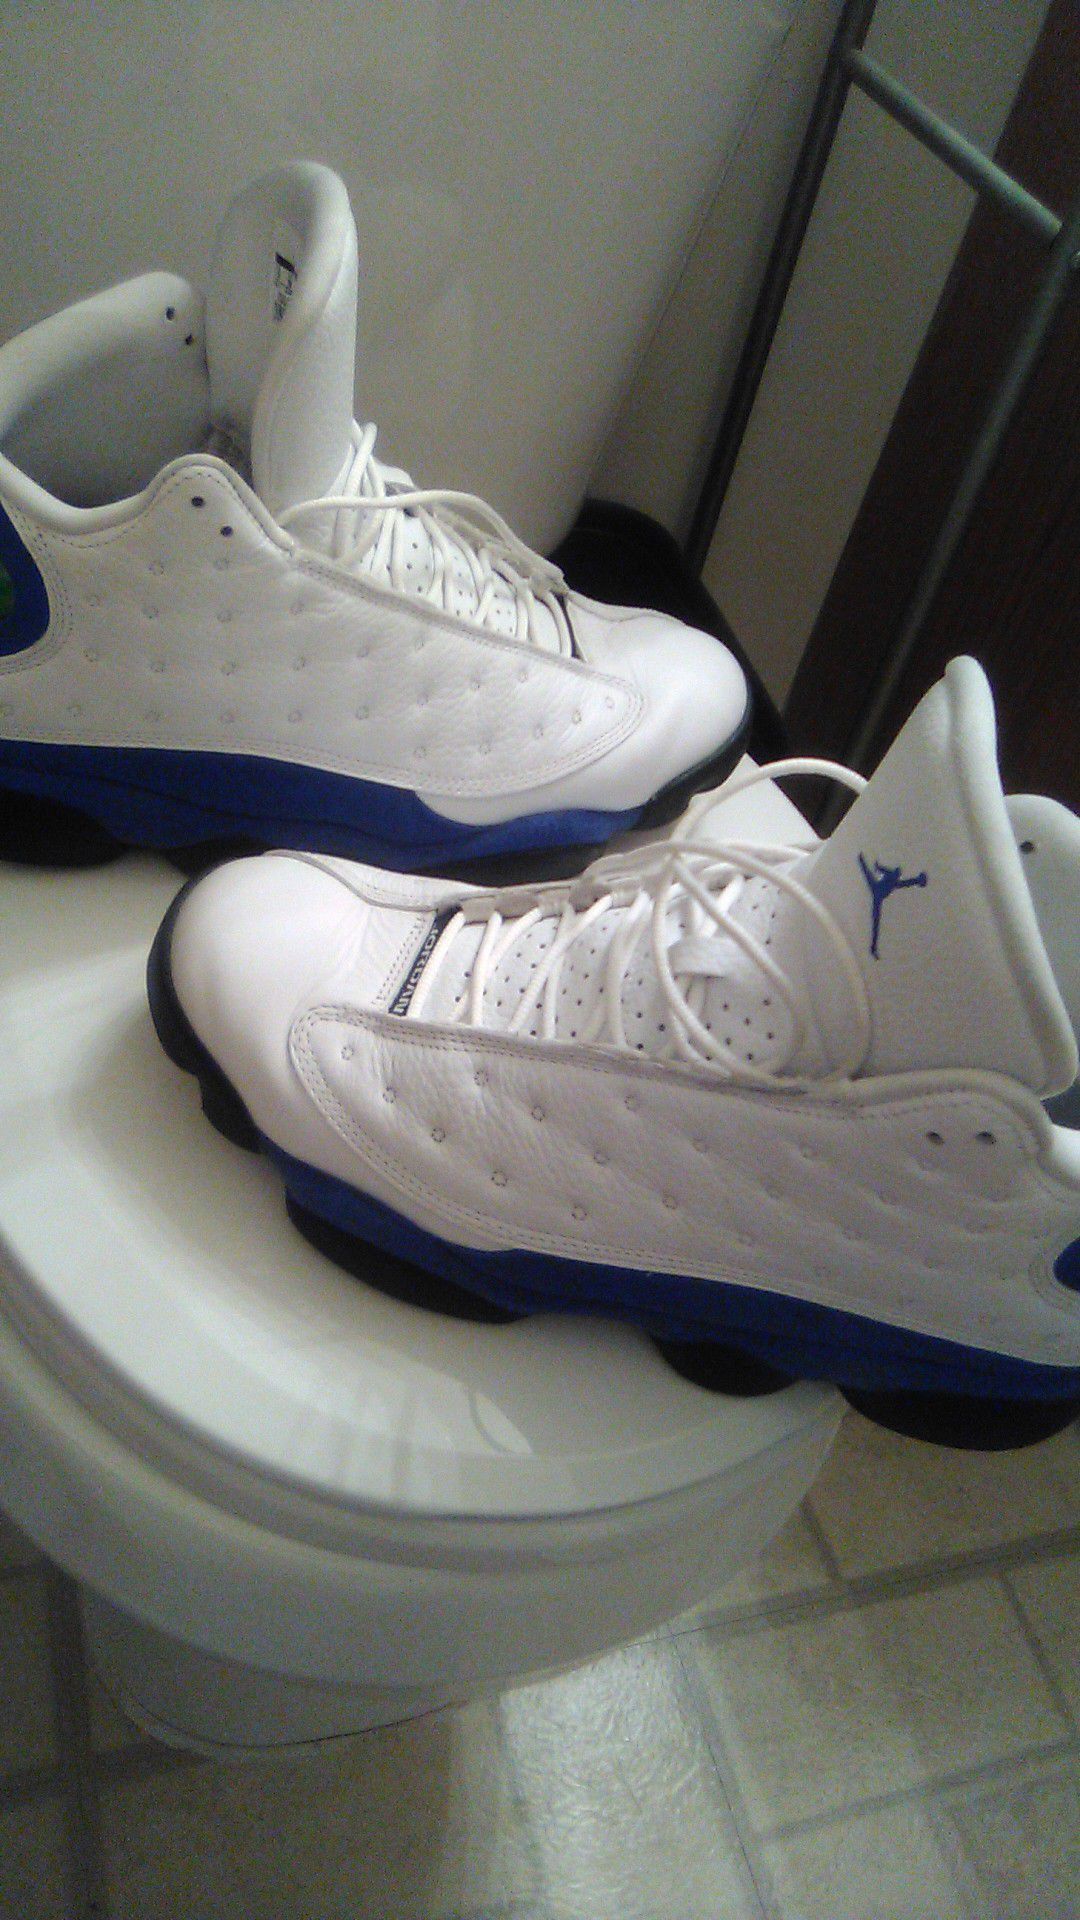 Jordan 13 size 11 (blue)